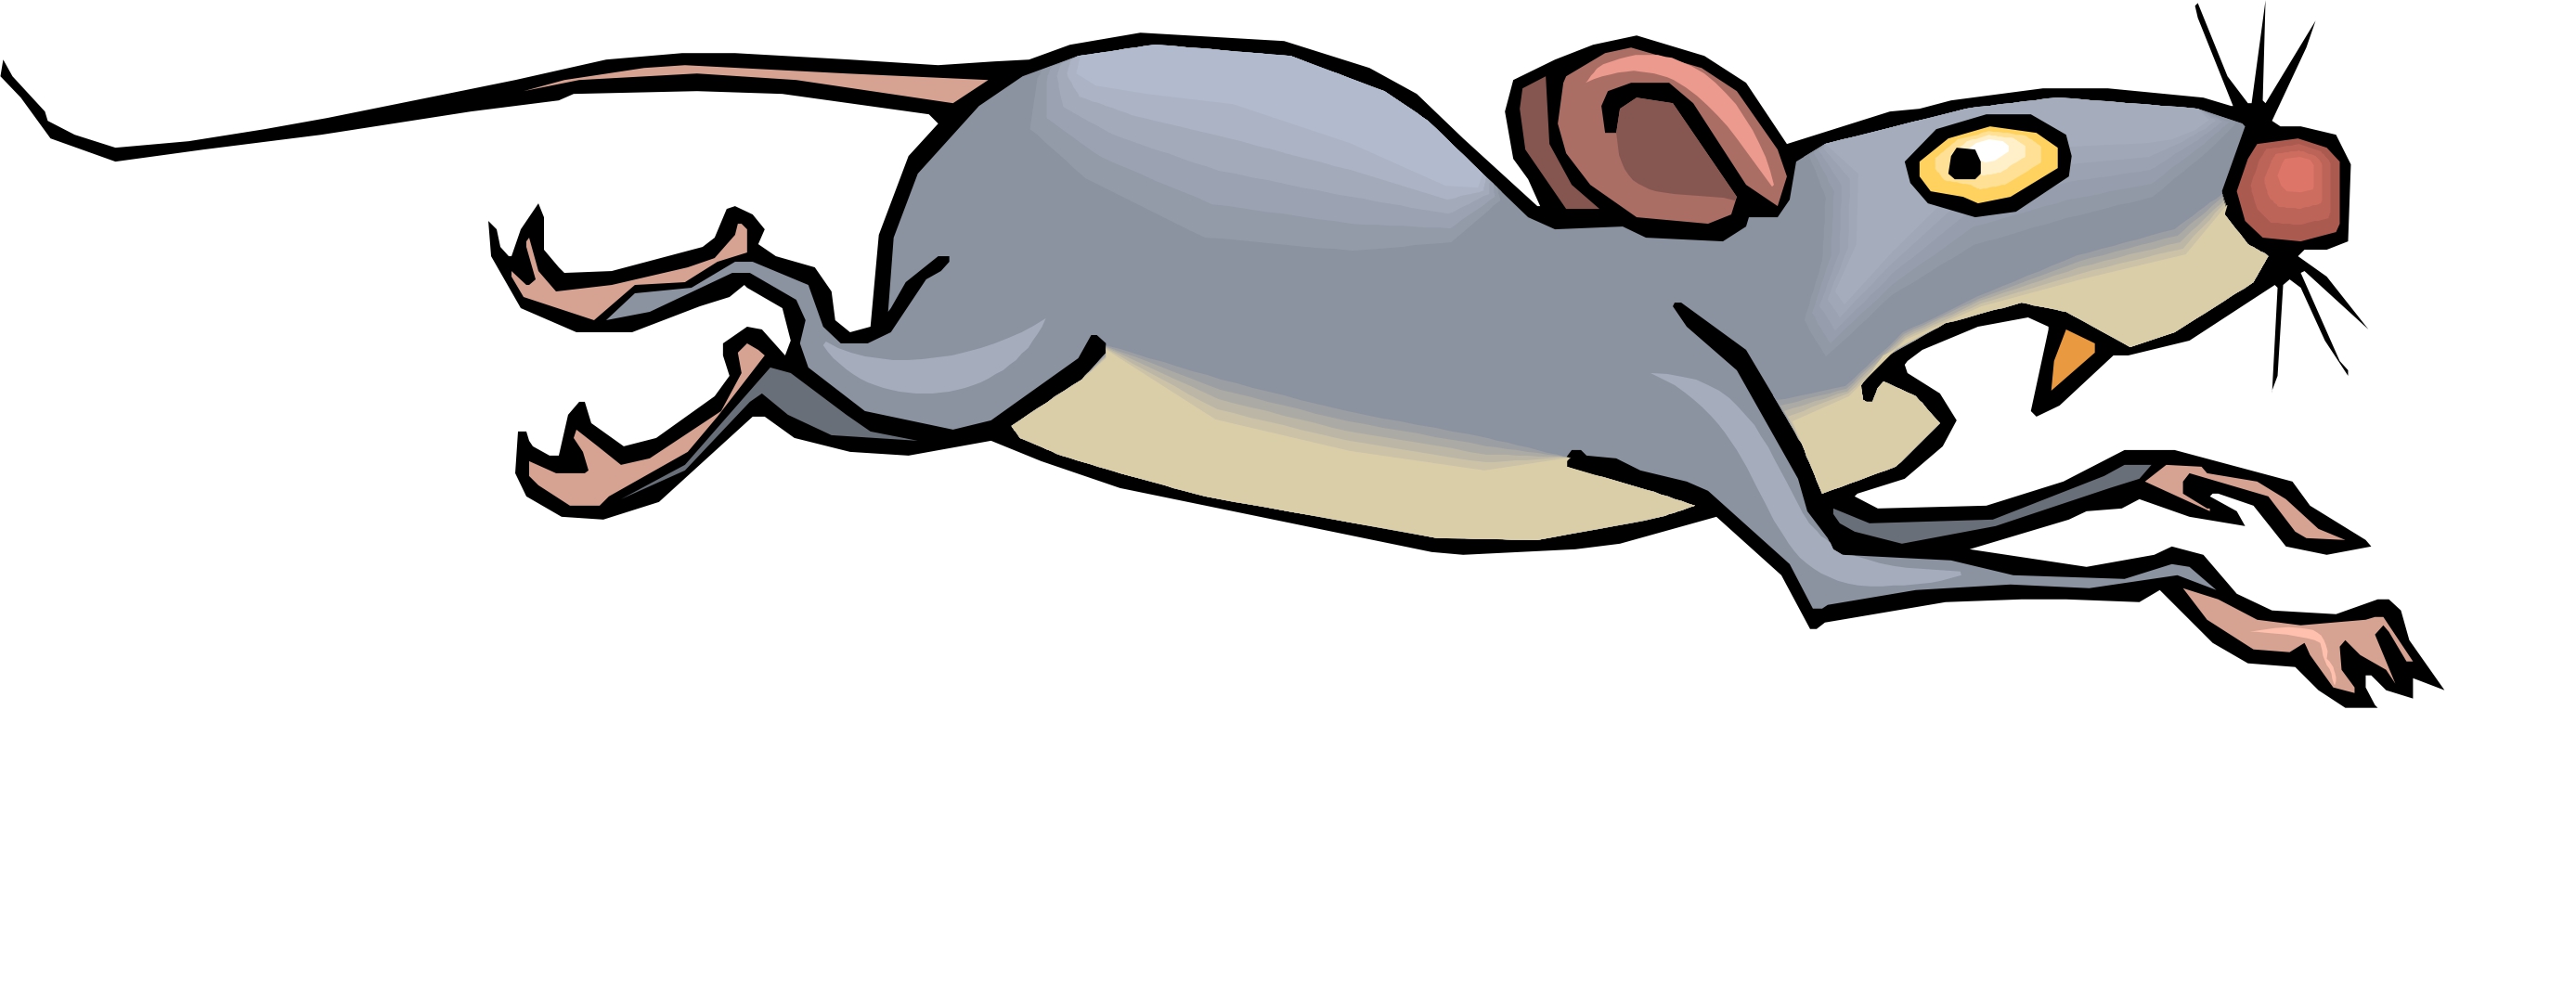 Running Cartoon Mouse | Free Images at Clker.com - vector clip art ...